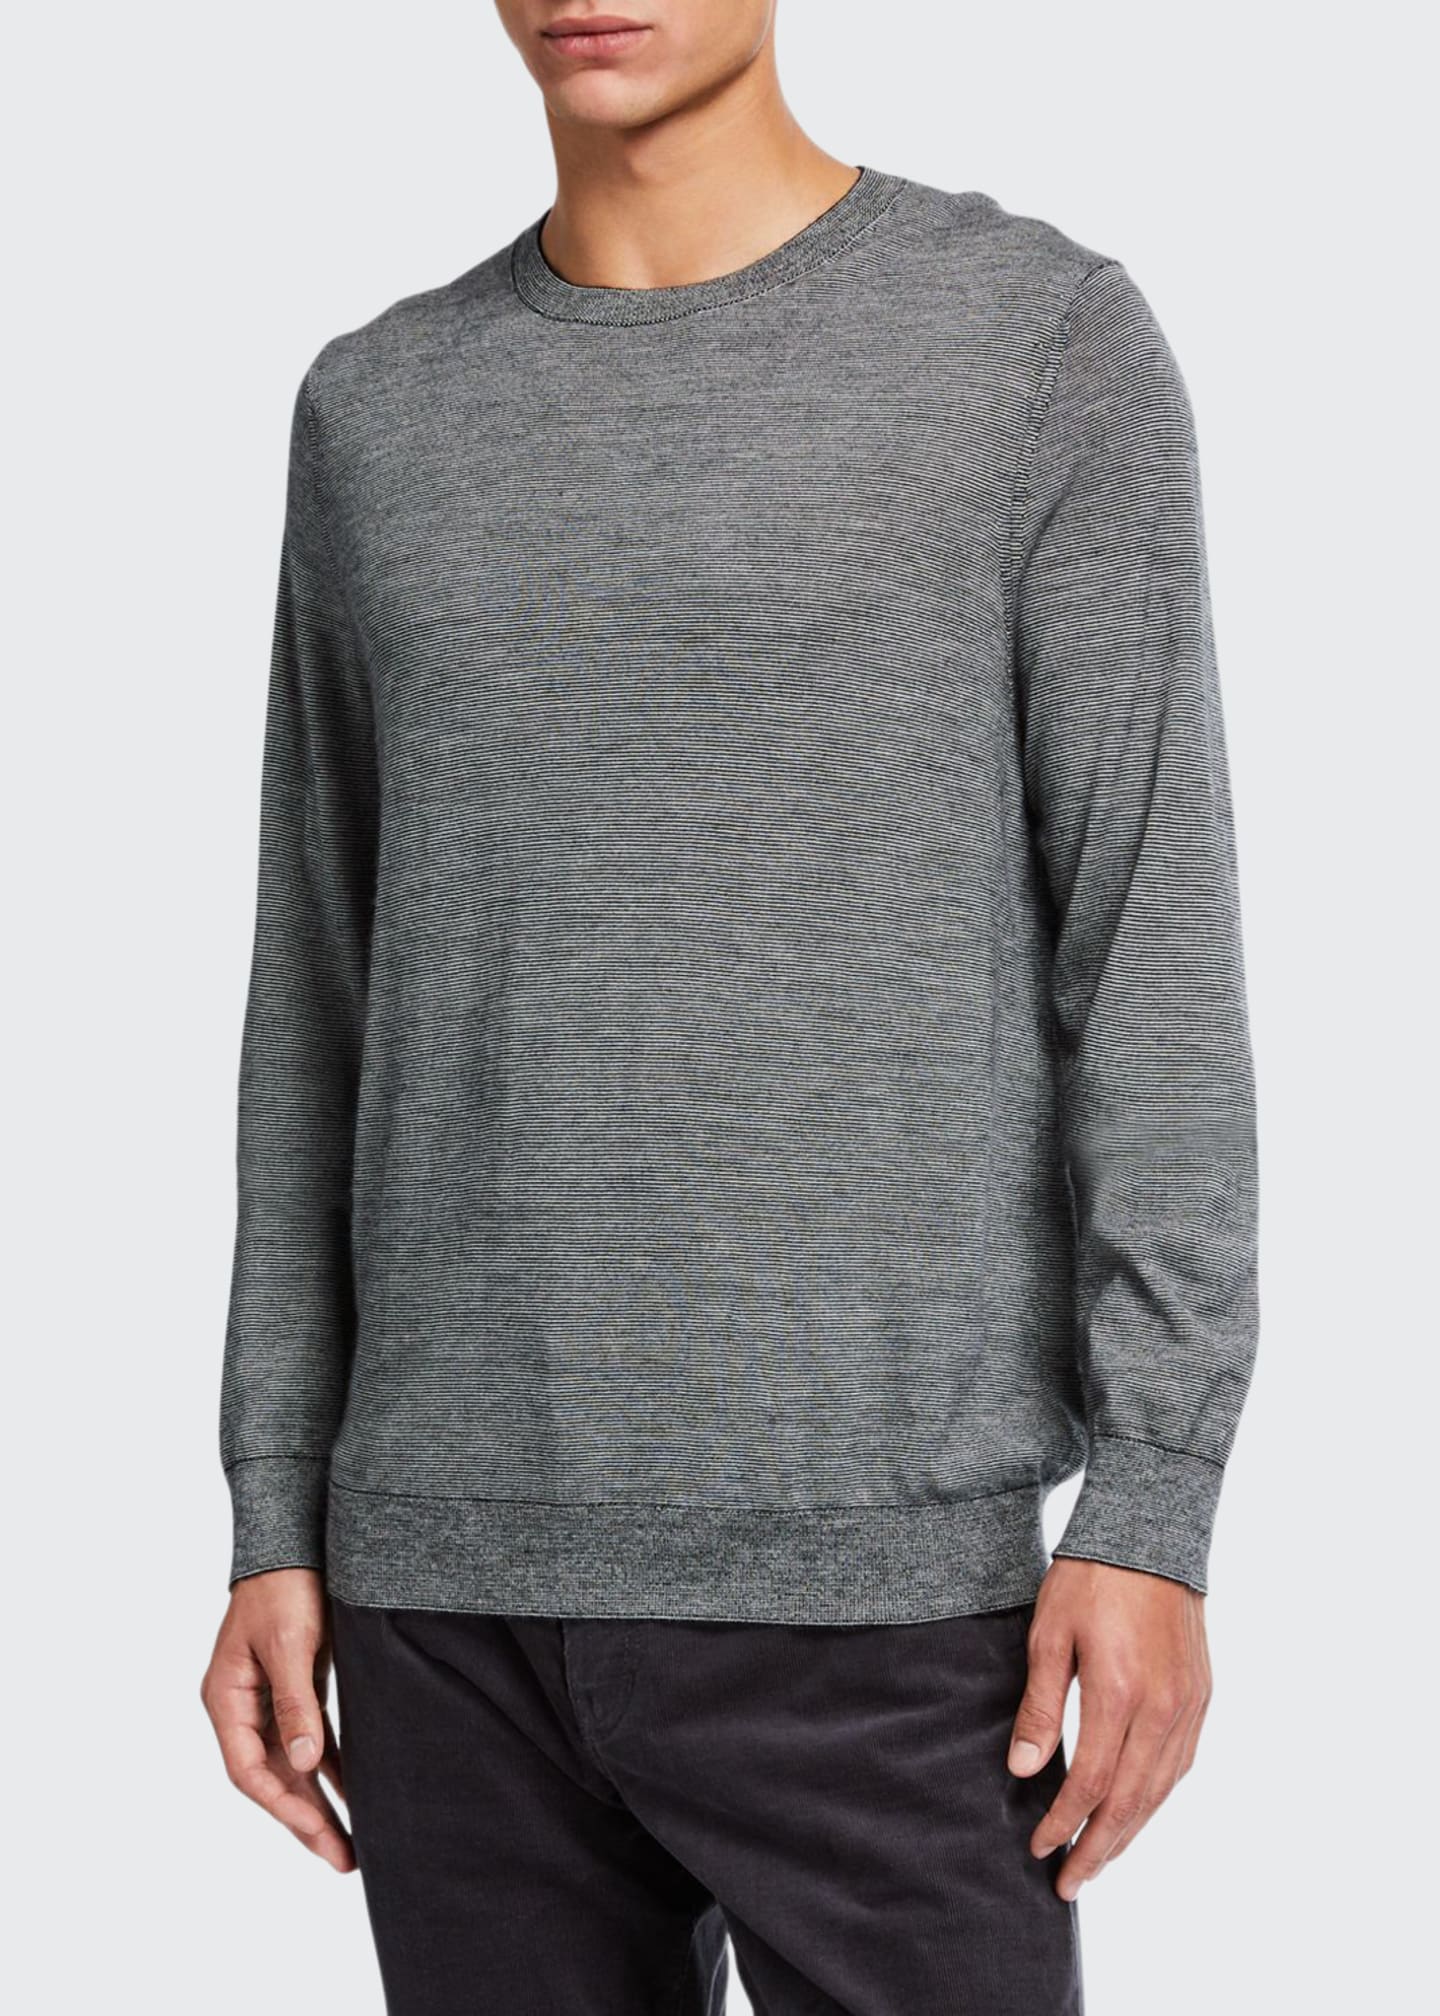 Vince Men's Striped Crewneck Sweater - Bergdorf Goodman